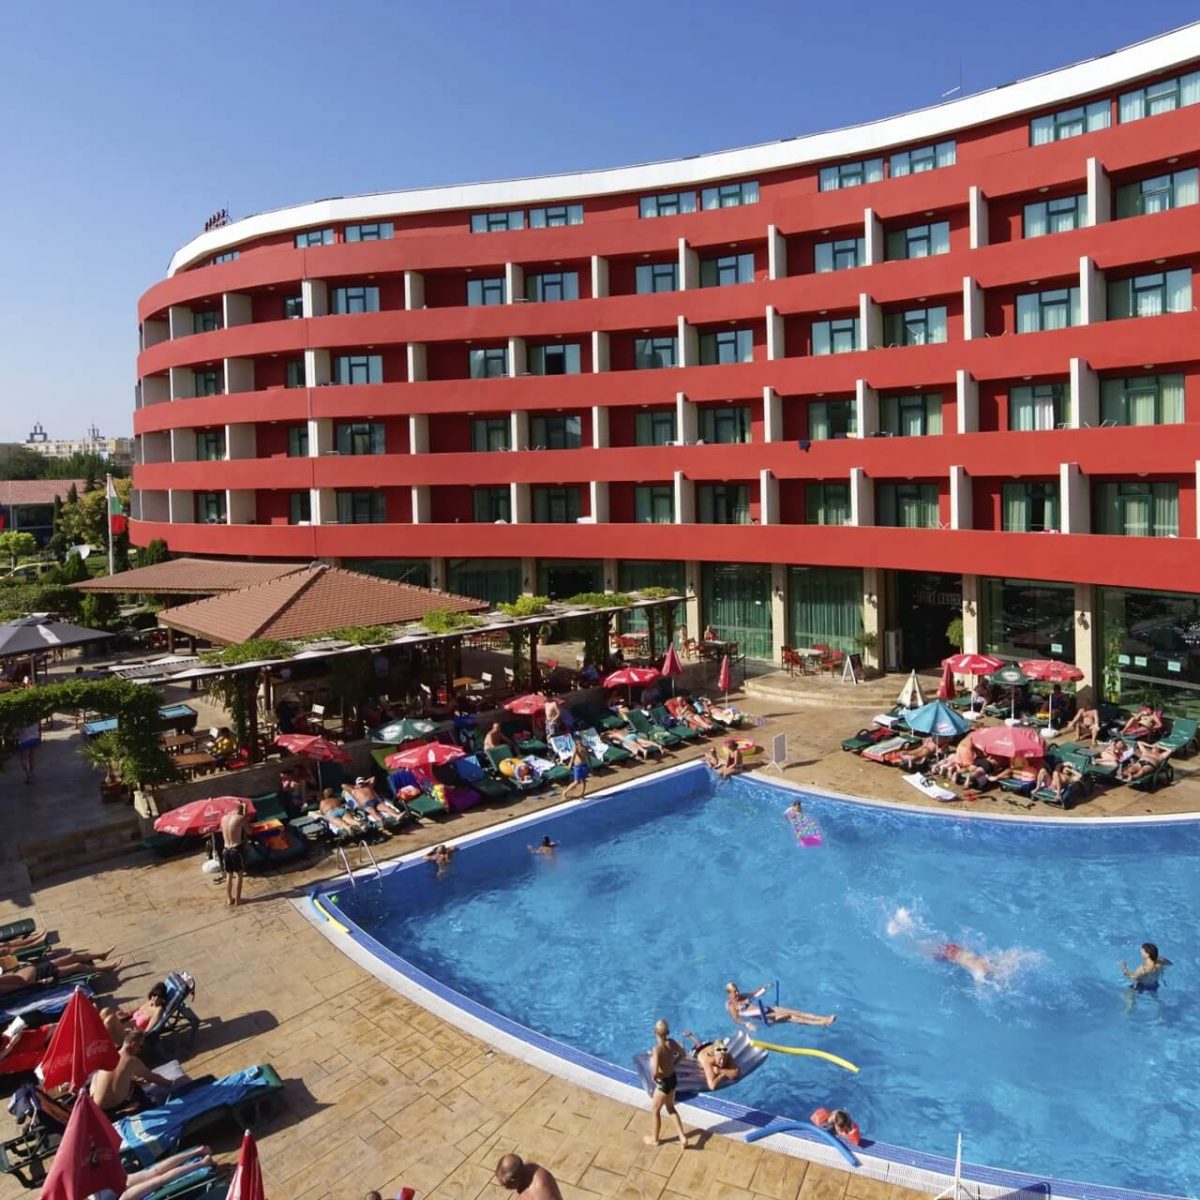 Mena Palace Hotel - Sunny Beach - Bulgaristan (1)